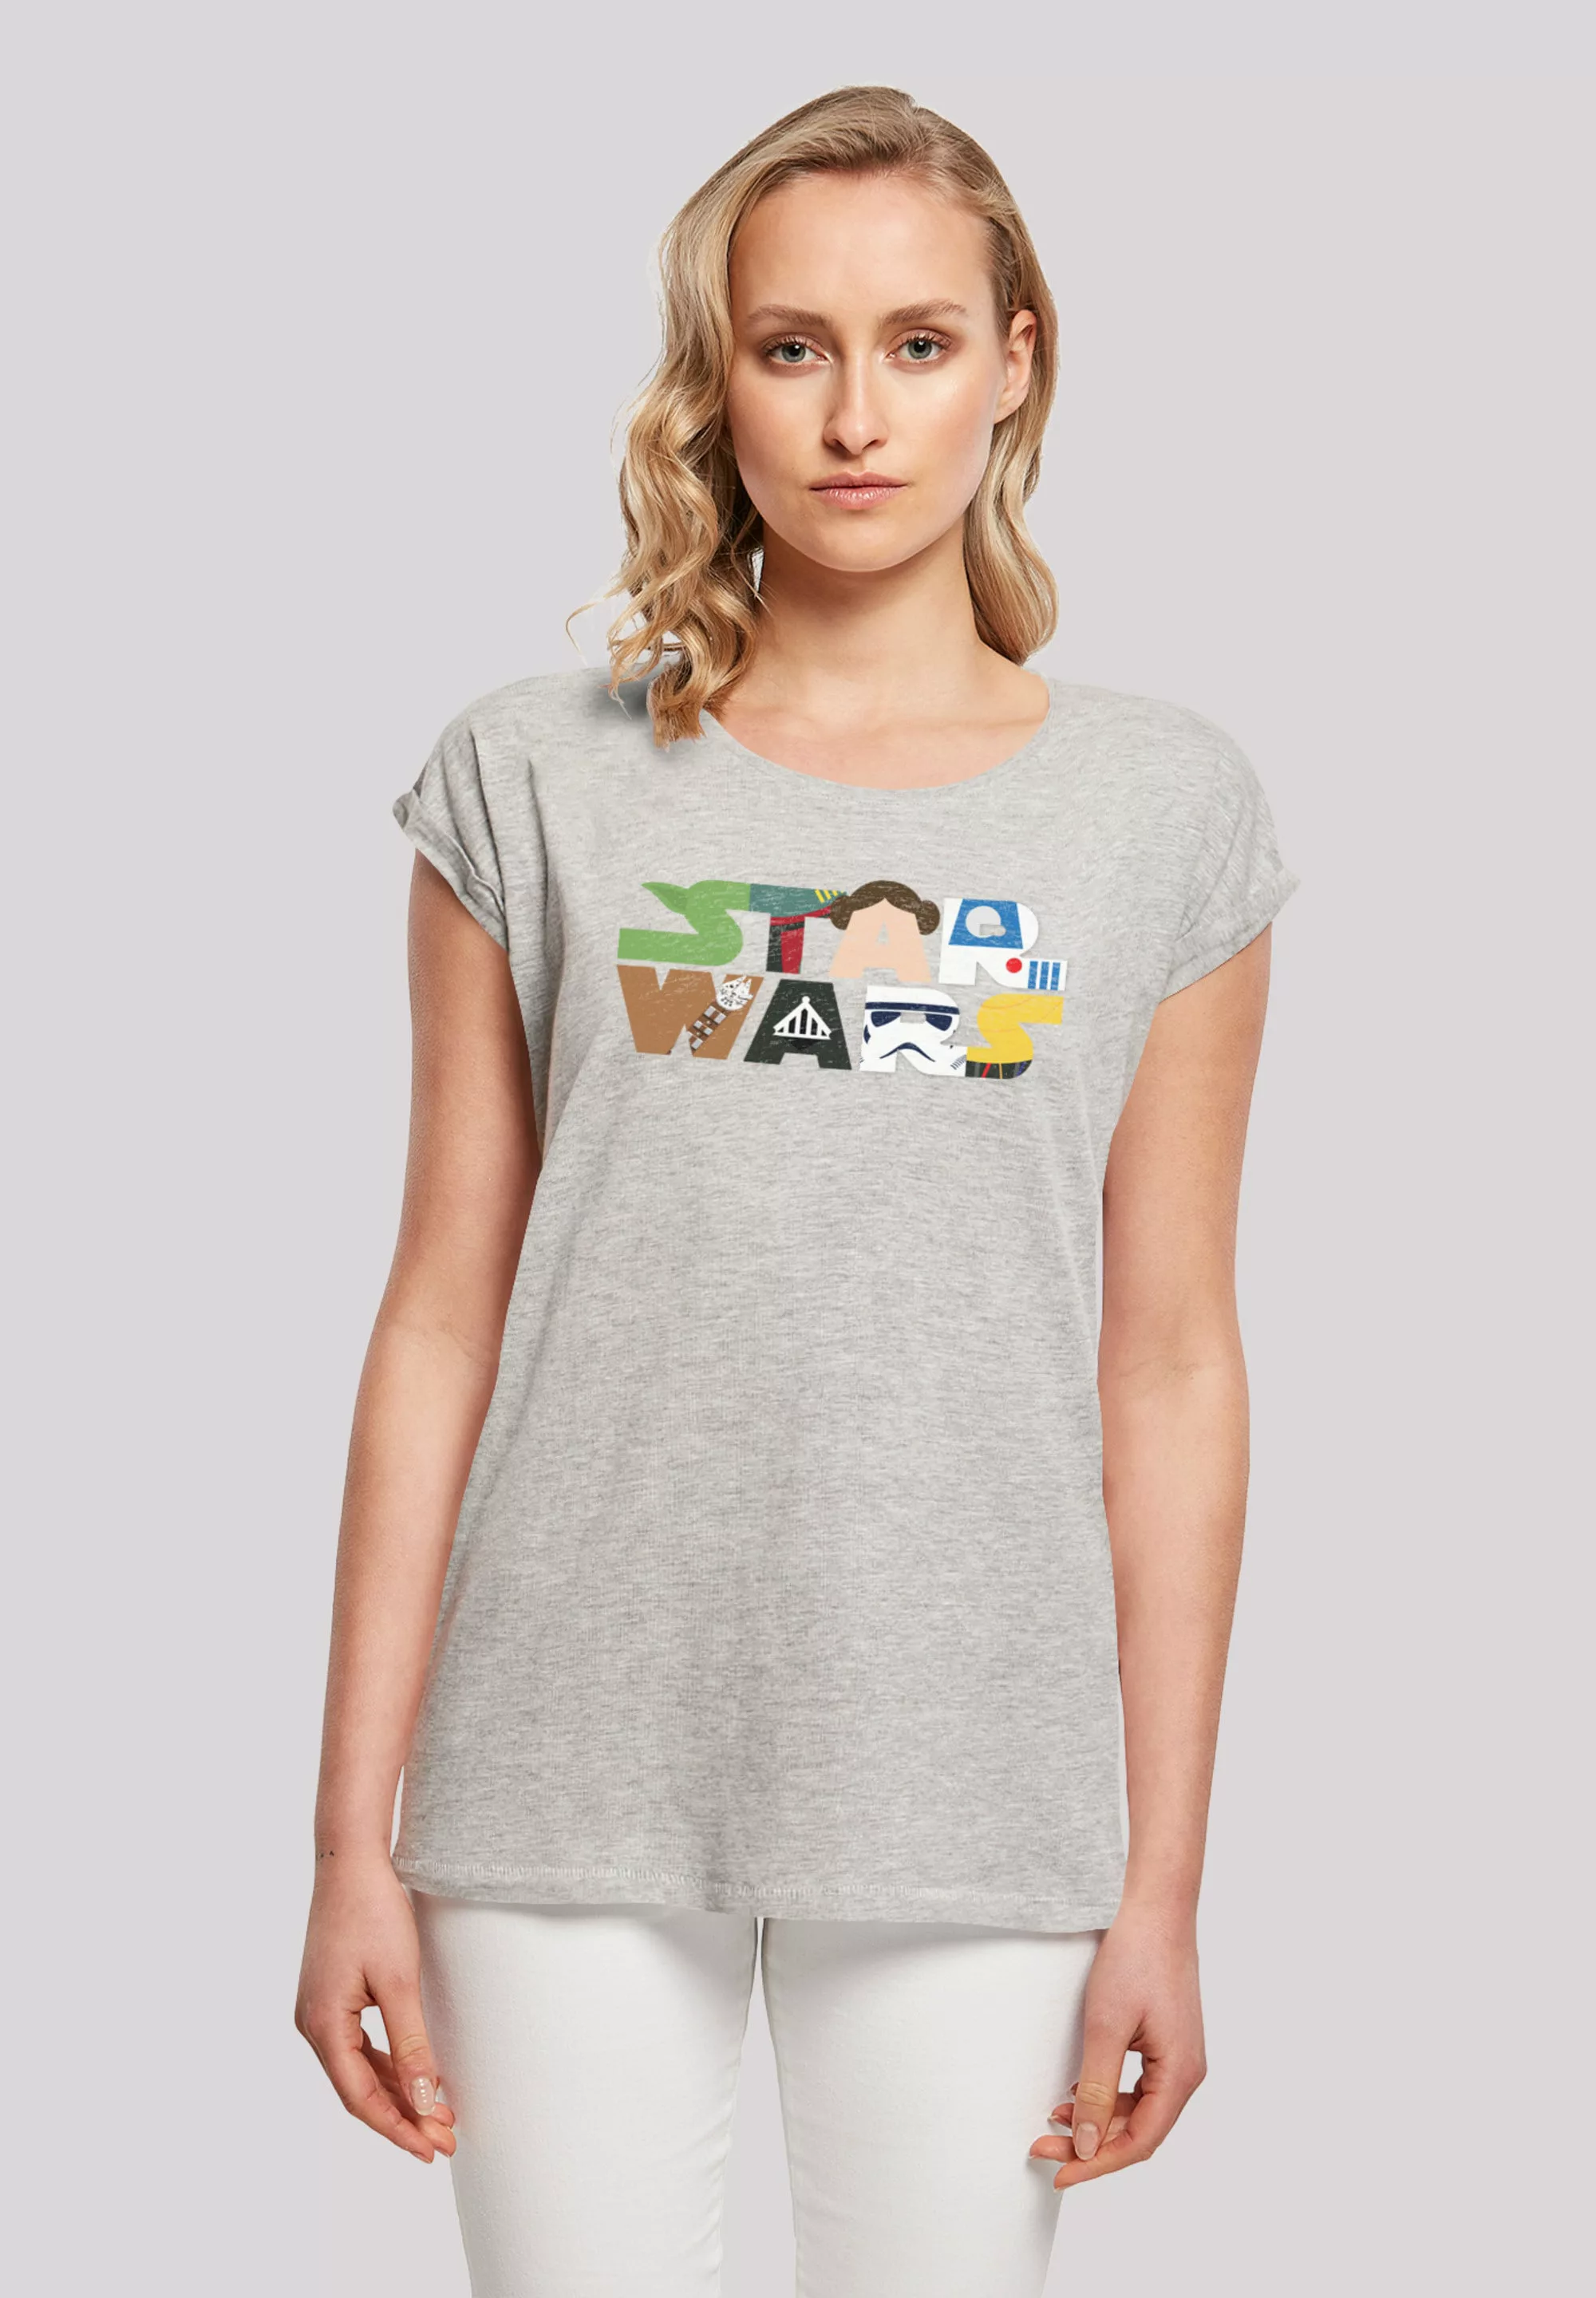 F4NT4STIC T-Shirt "Star Wars Character Logo", Print günstig online kaufen